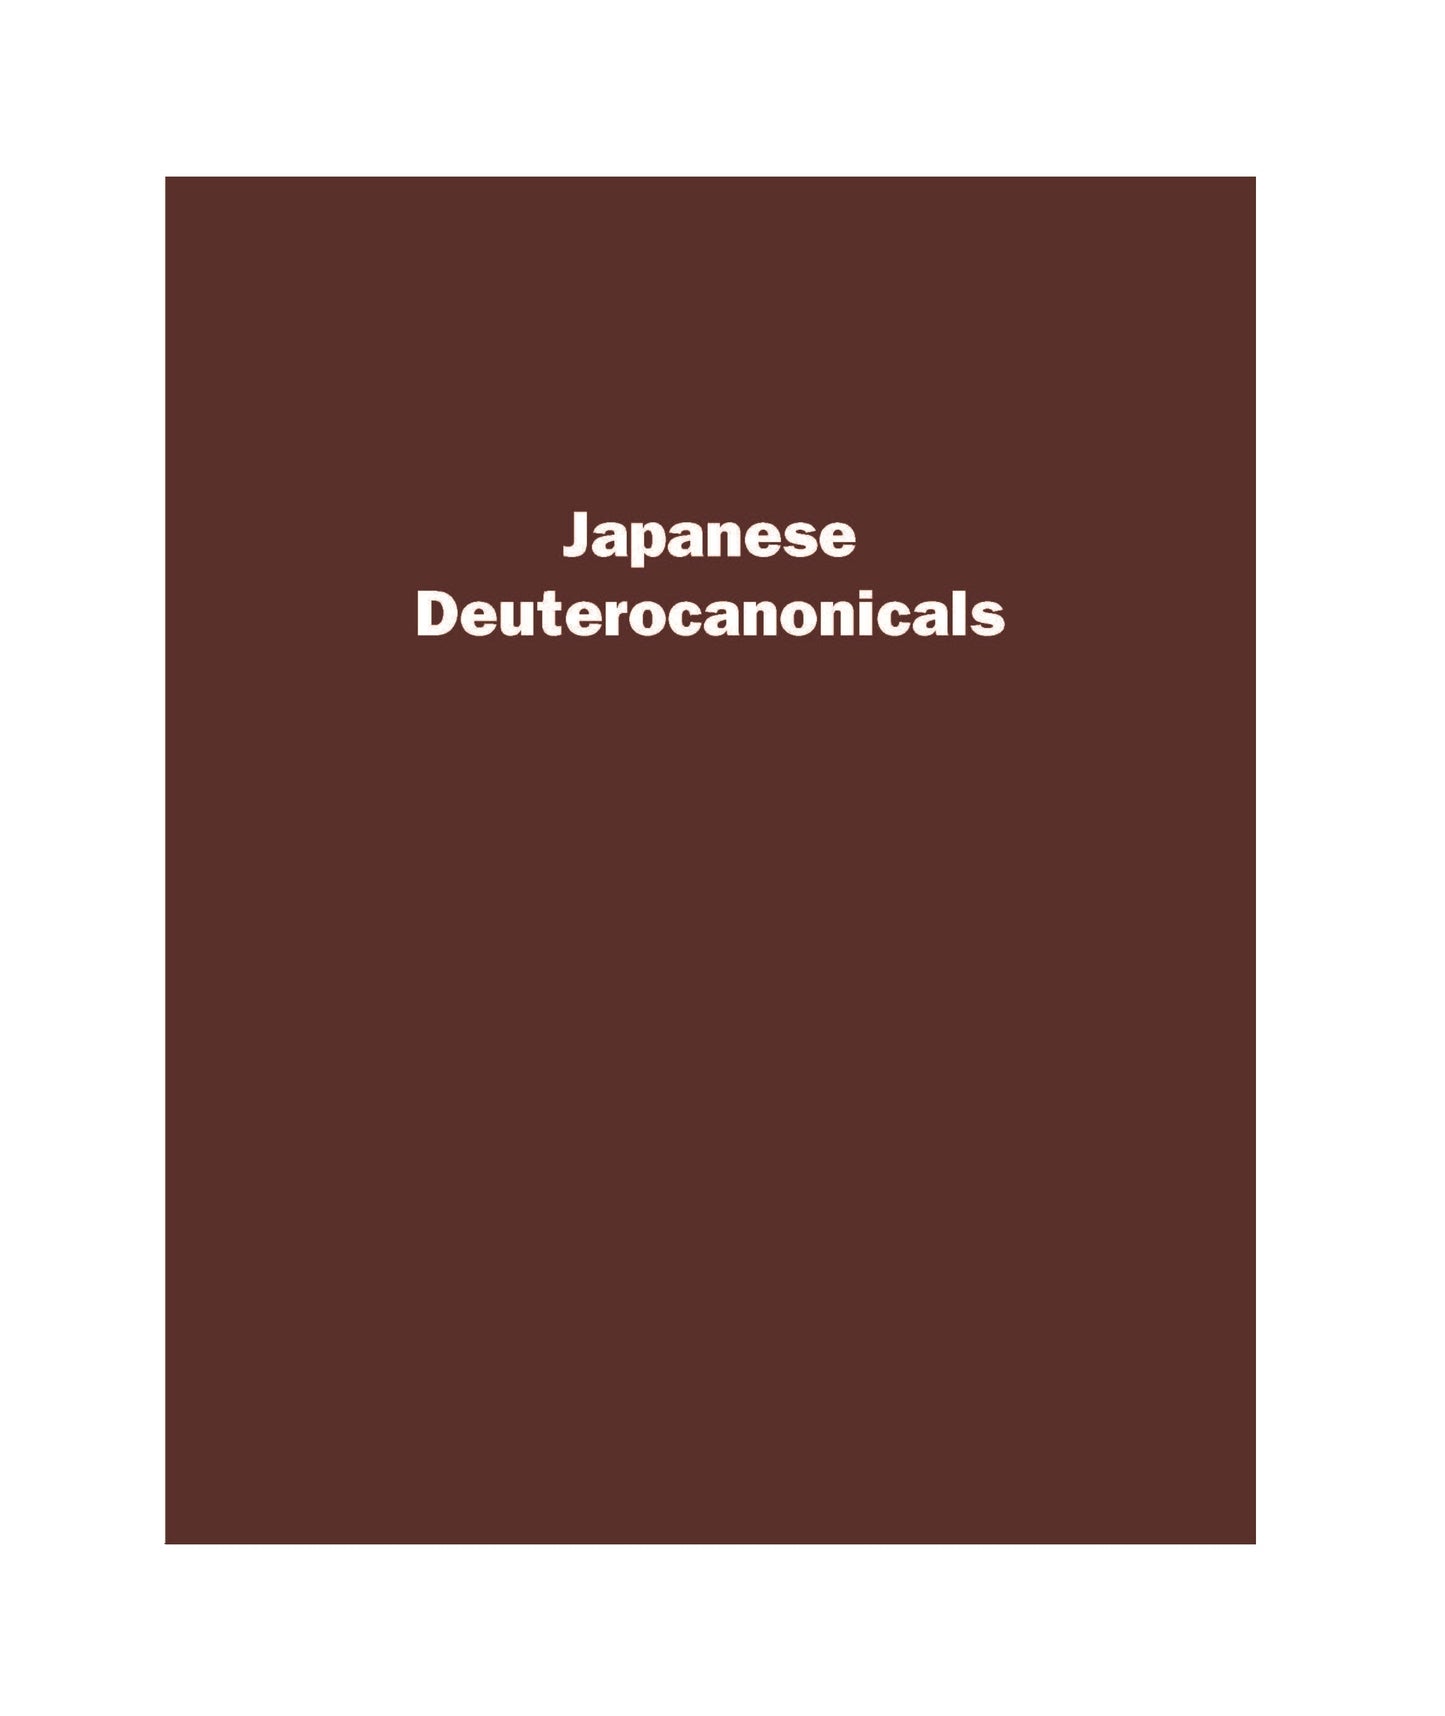 Japanese Deuterocanonicals - Print on Demand